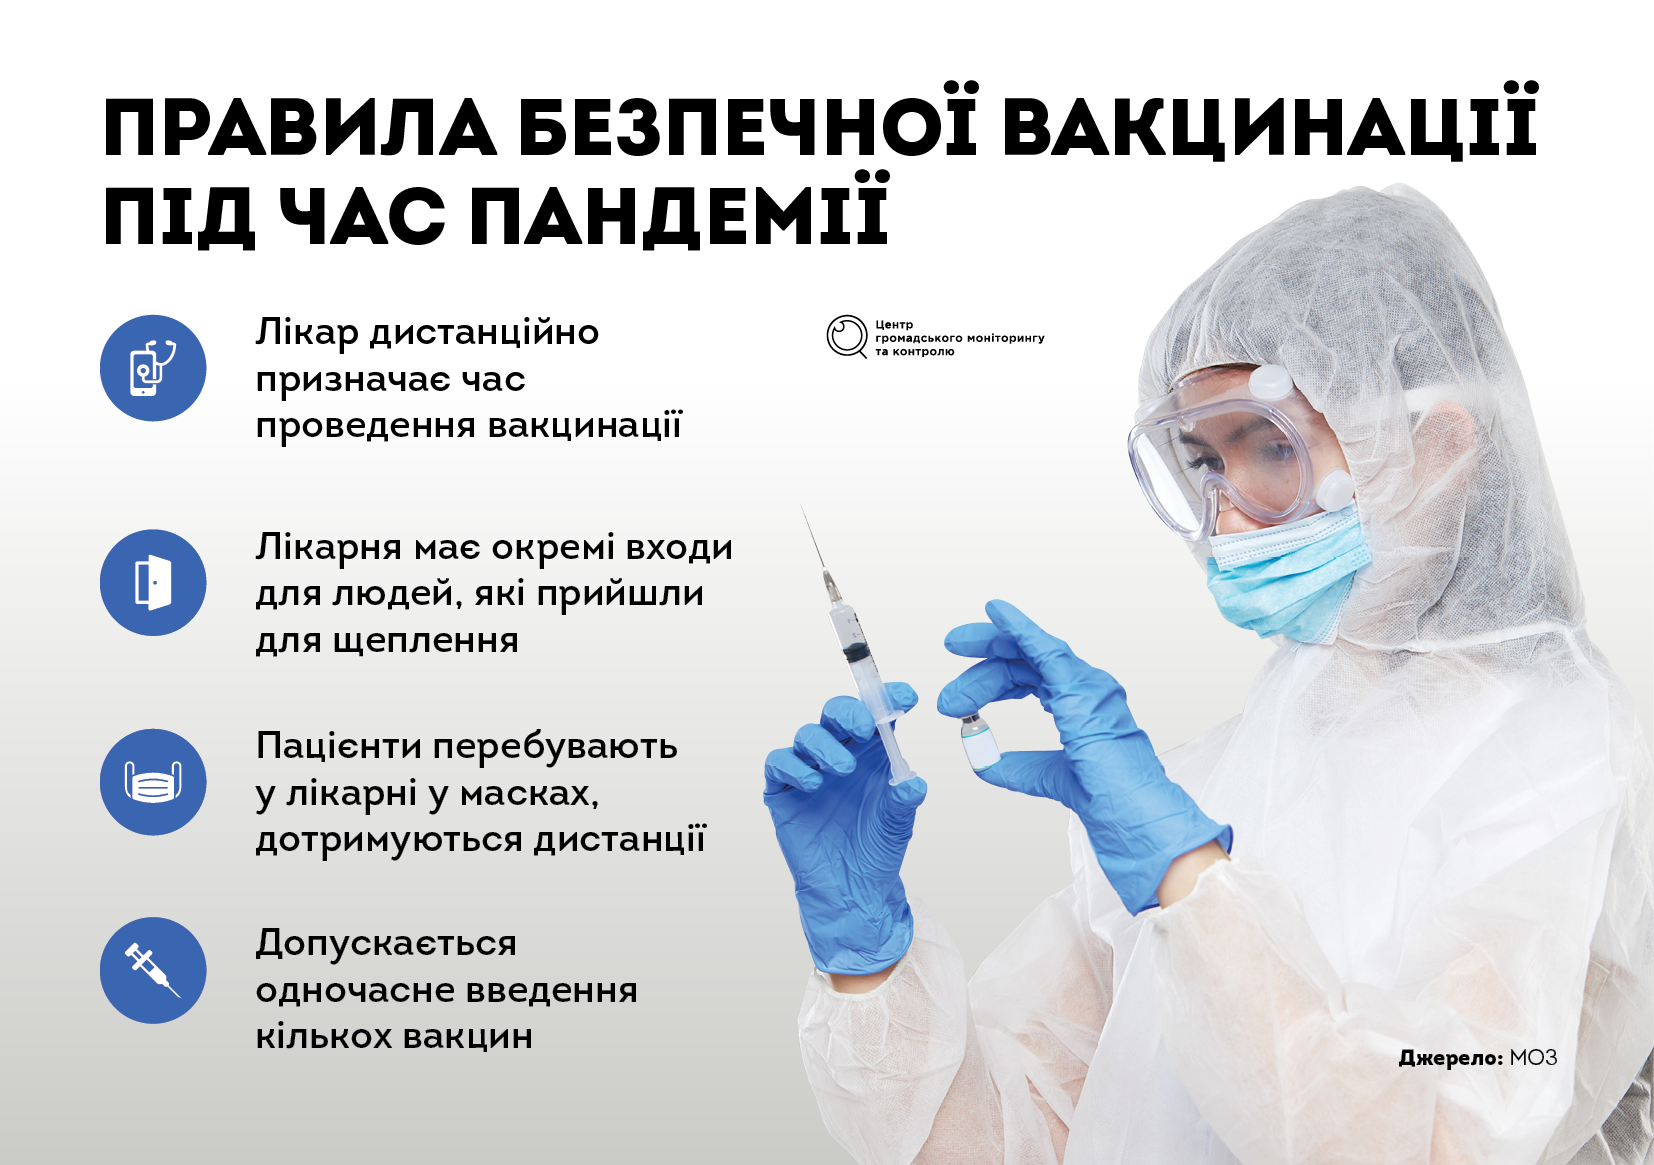 naglyad vaccination ukr